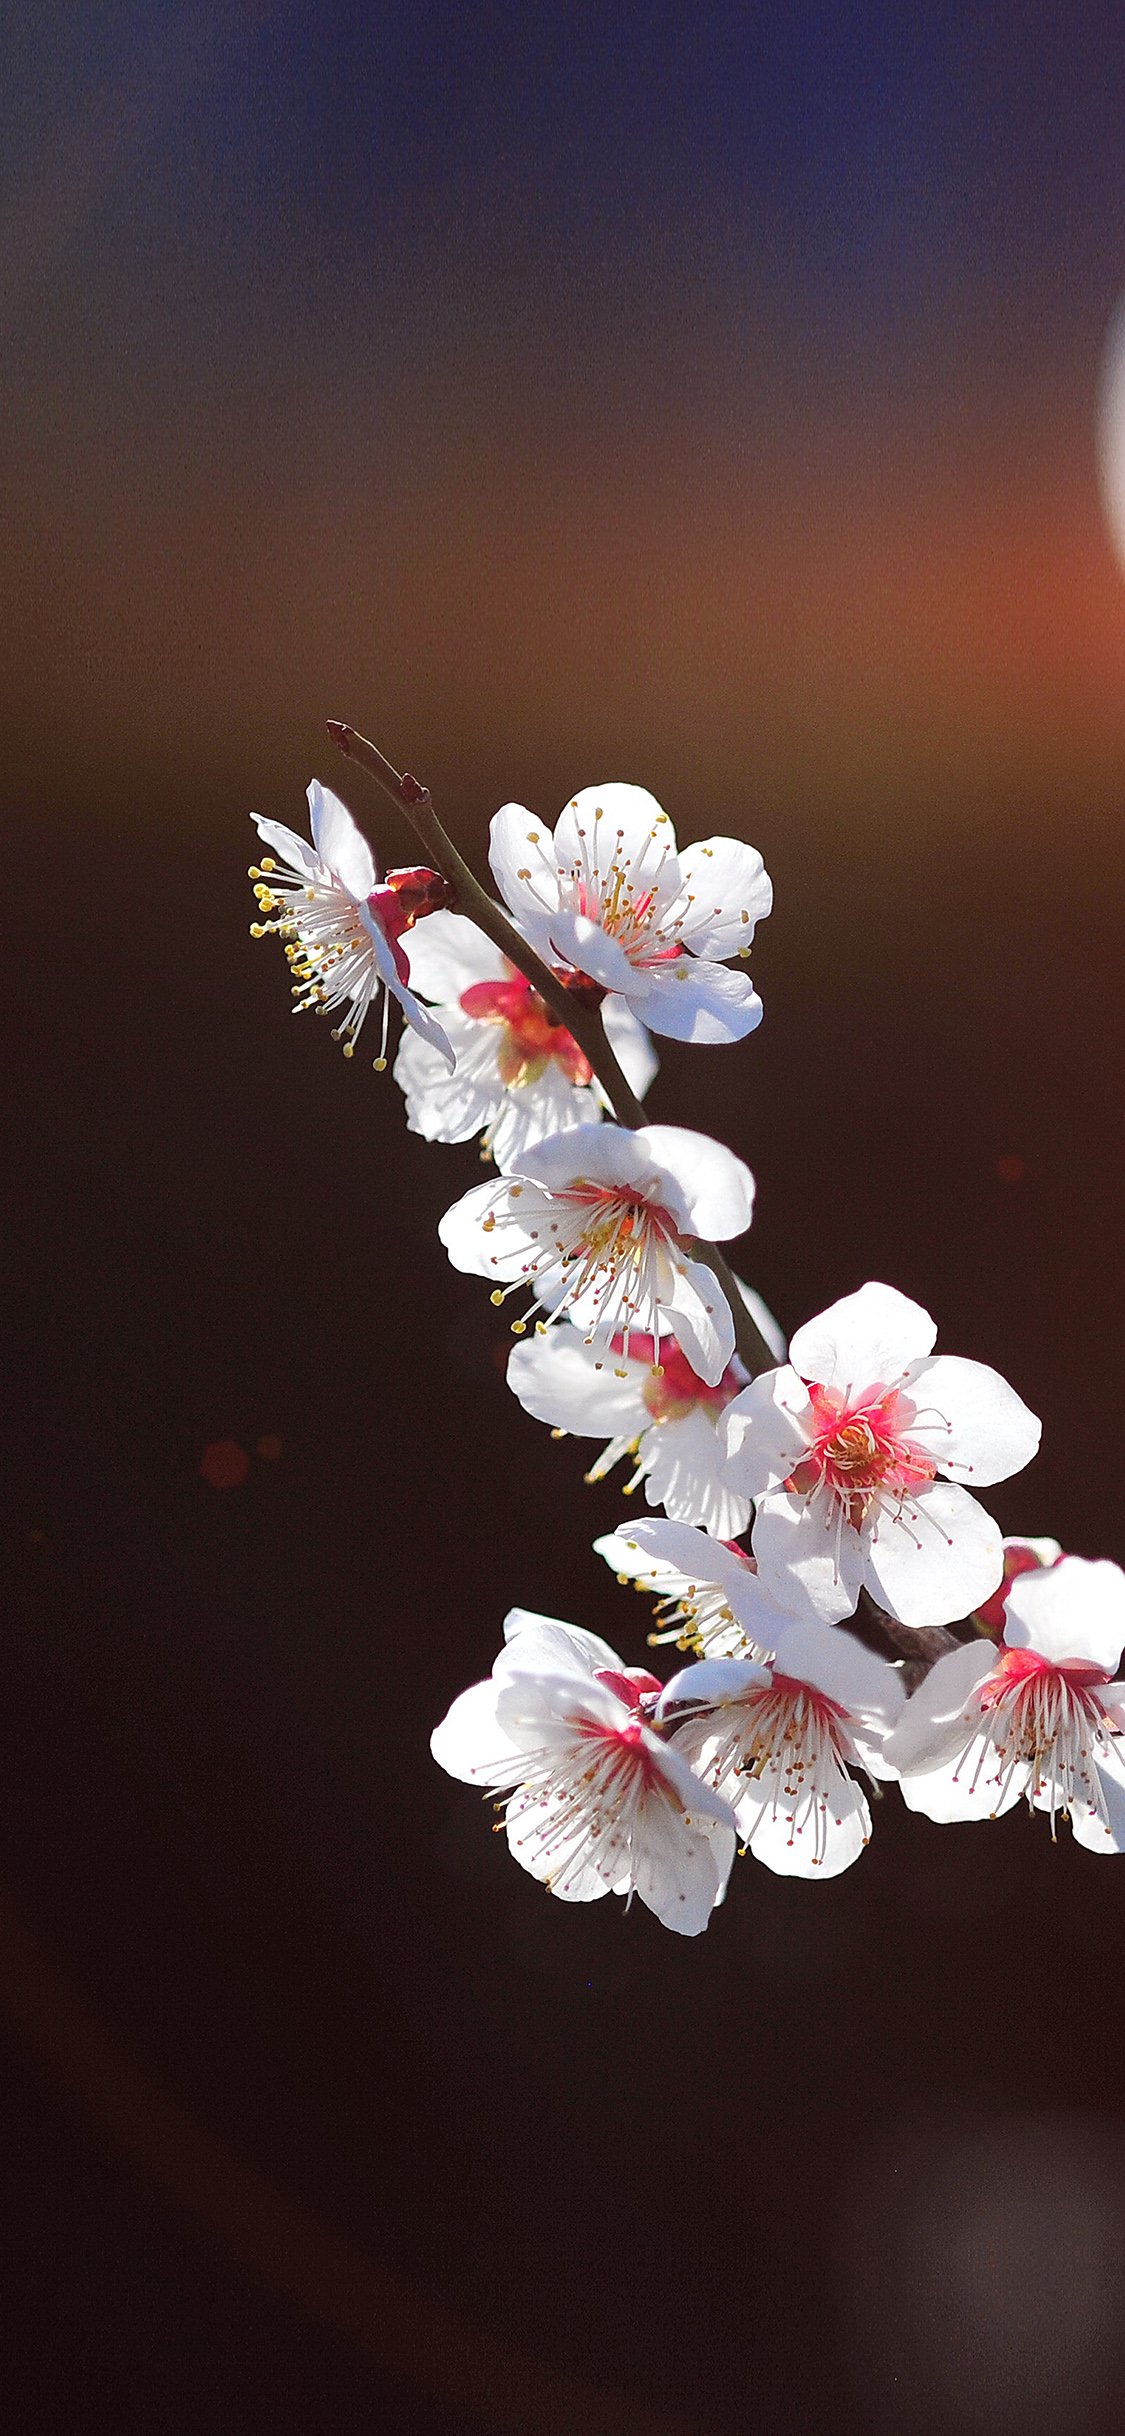 iPhone X wallpaper. spring flower sakura nature tree flare